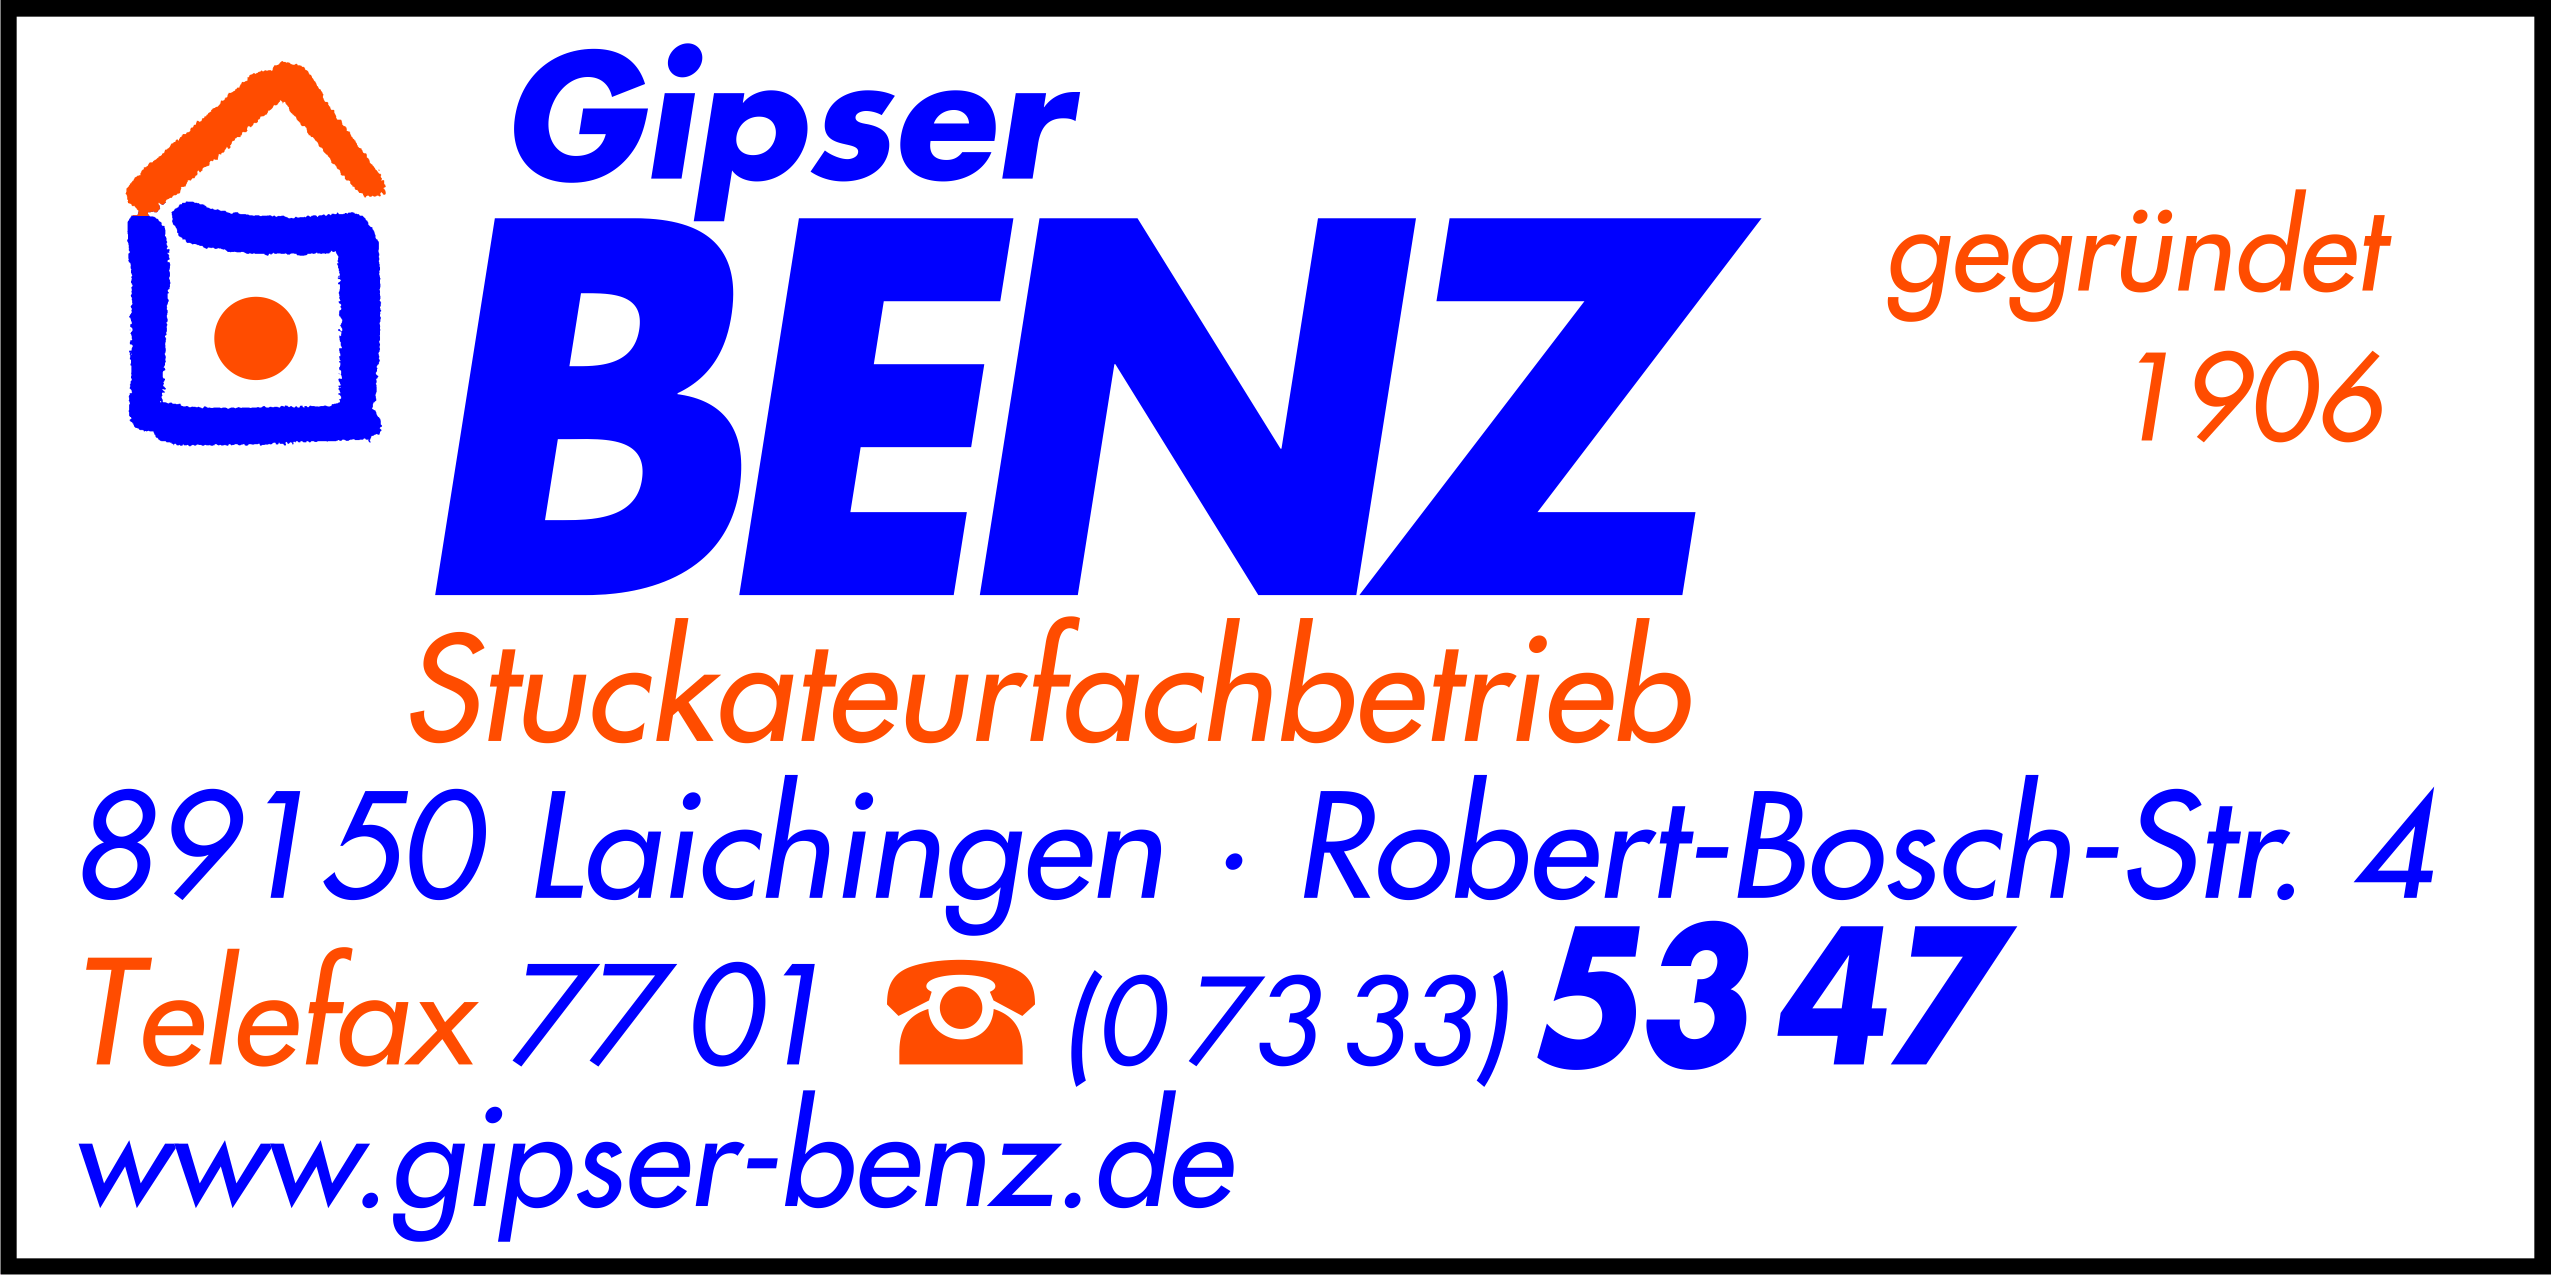 Anzeige Gipser Benz GmbH Stuckateurbetrieb